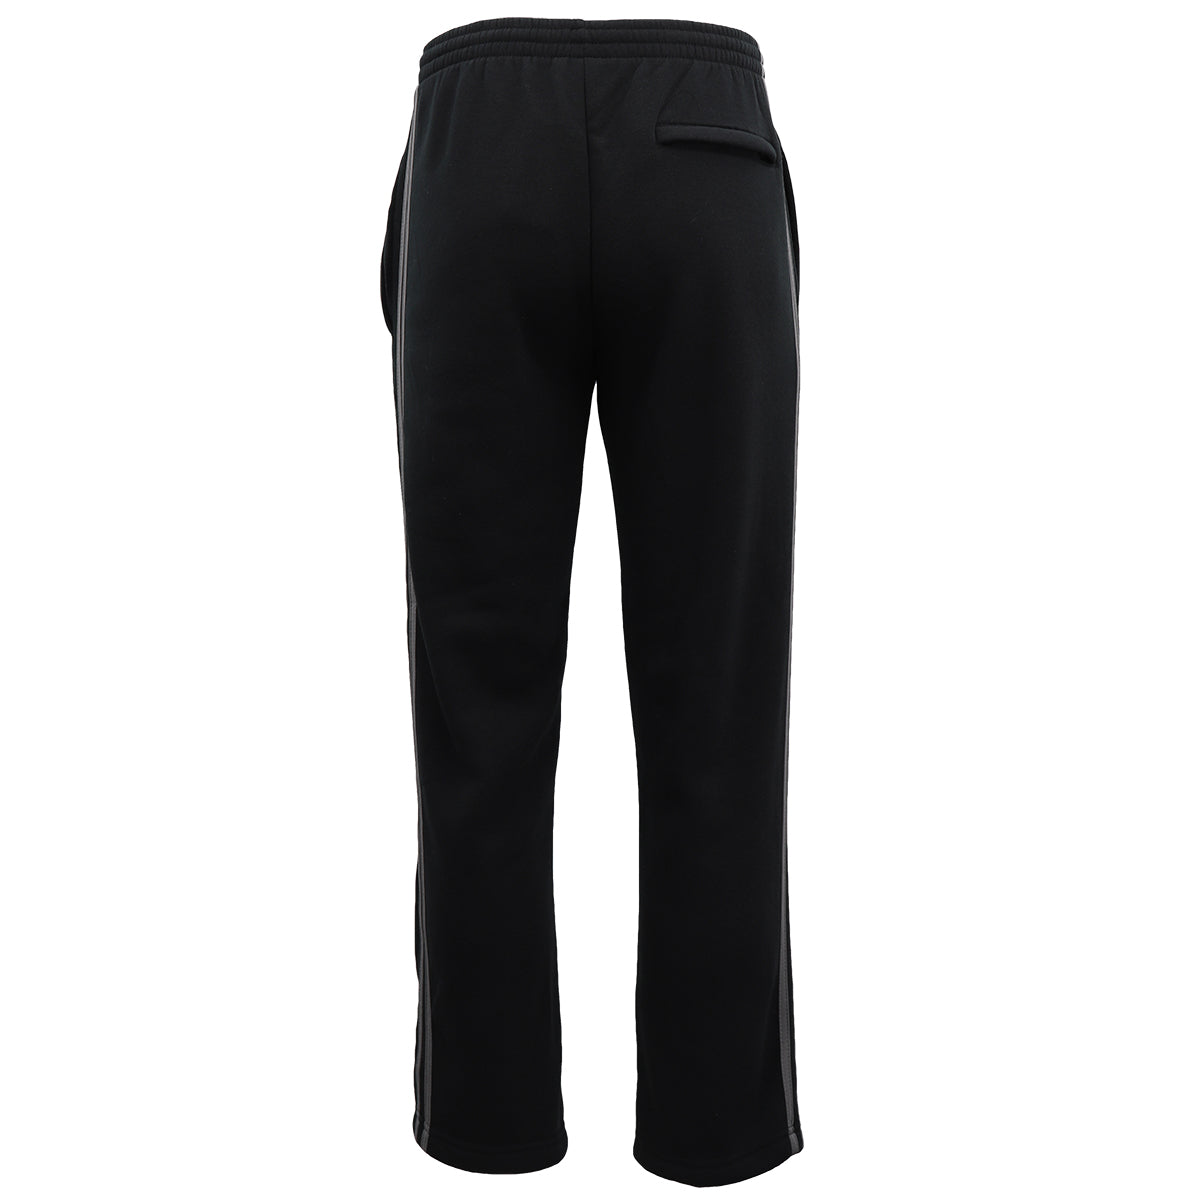 Men's Fleece Casual Sports Track Pants w Zip Pocket Striped Sweat Trousers S-6XL, Black w Grey Stripes, 3XL